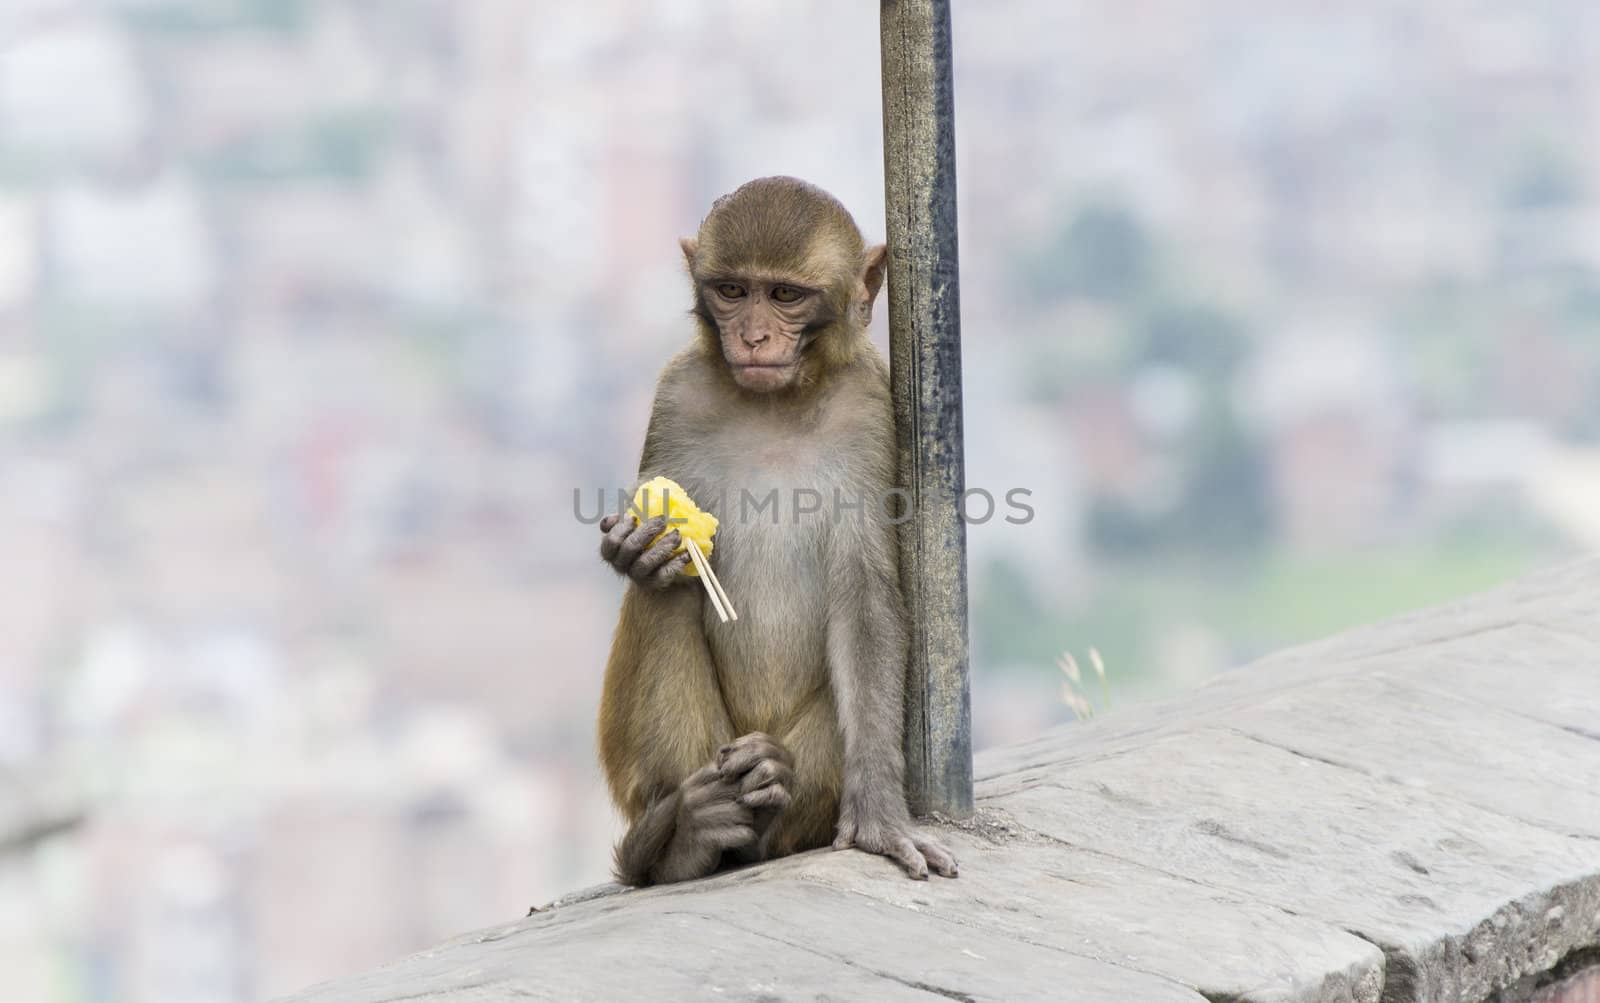 single monkey in nepal sitting on wall. vertical image.